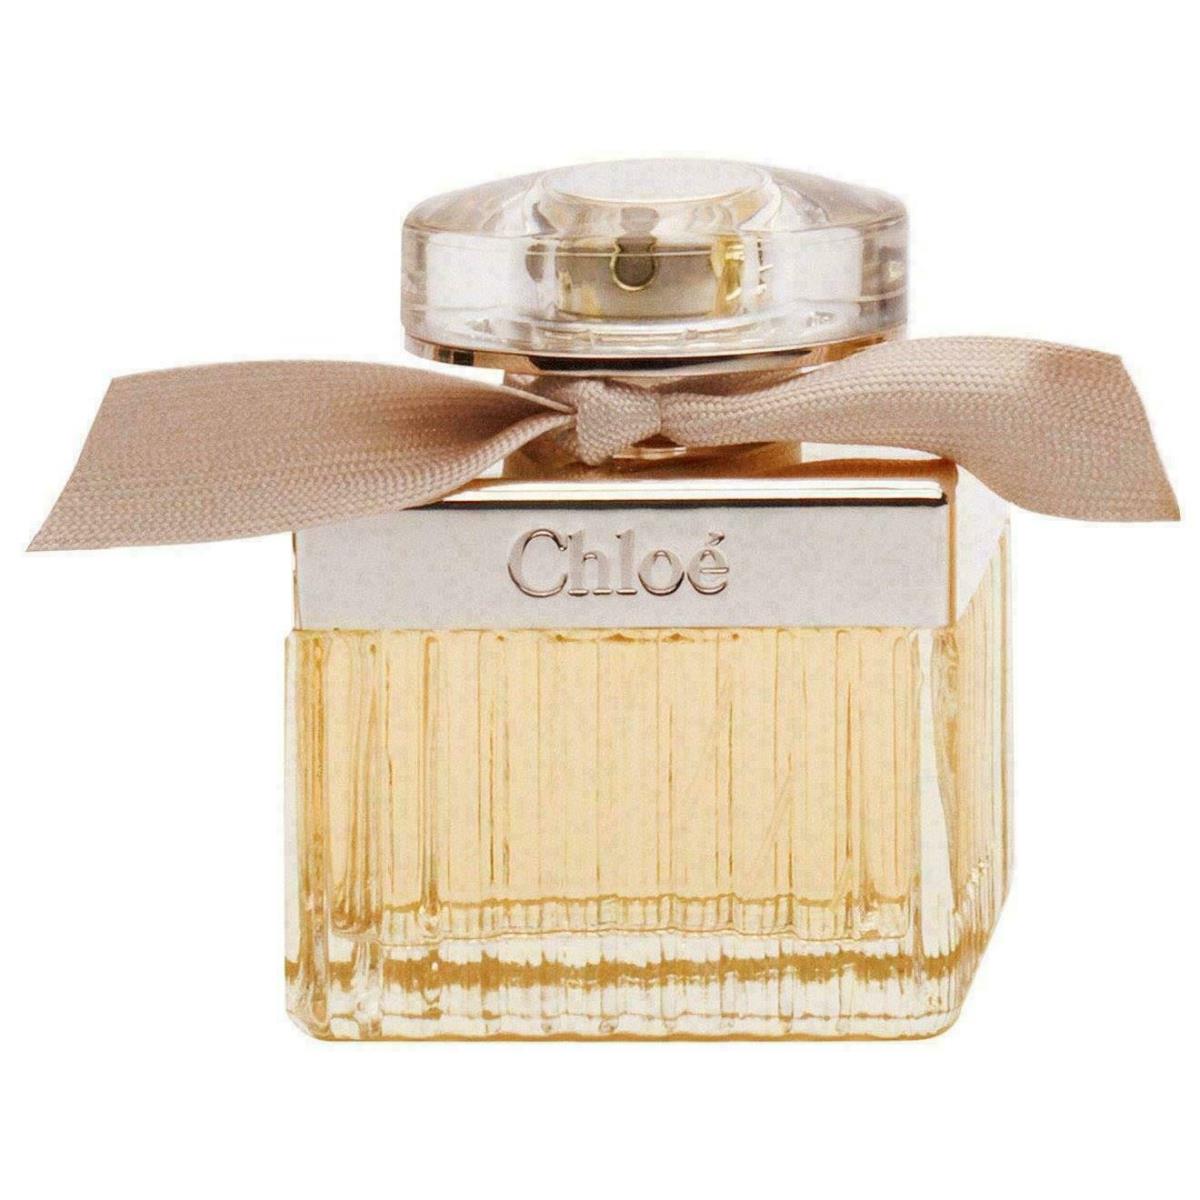 Chloe Women Perfume Edp Eau DE Perfume 2.5 OZ 75 ML Tester